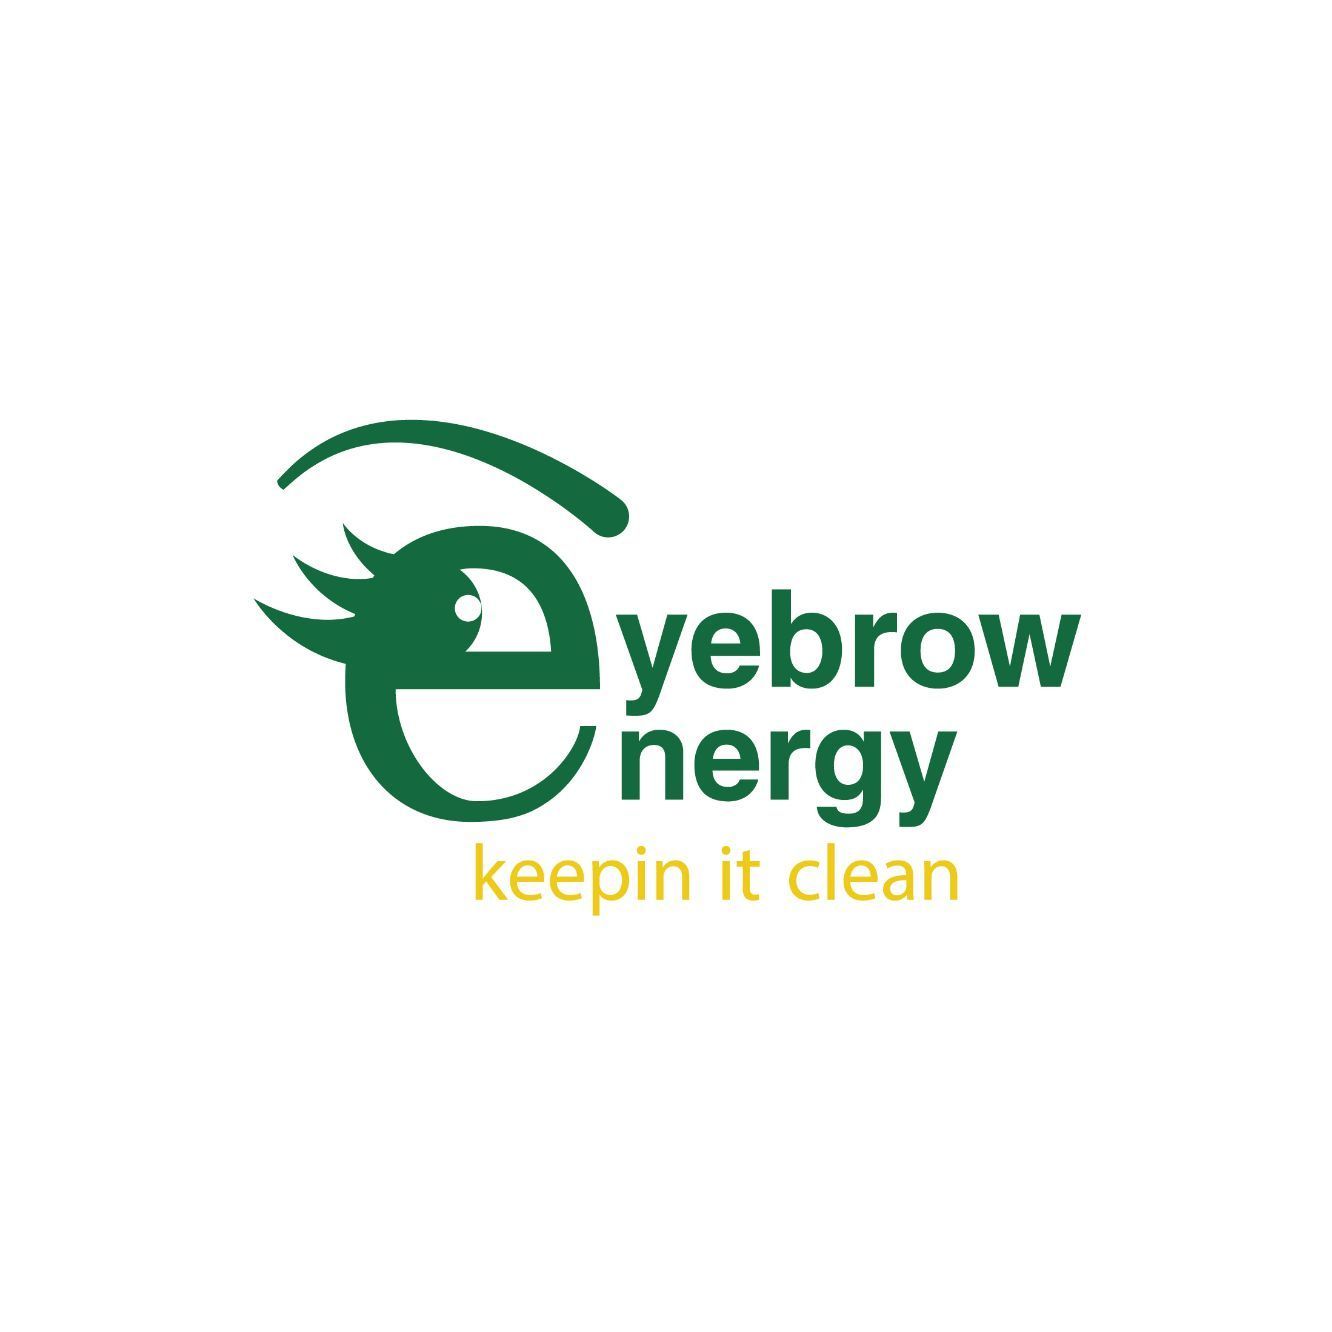 Eyebrow Energy, 1919 N Main St, Houston, 77009